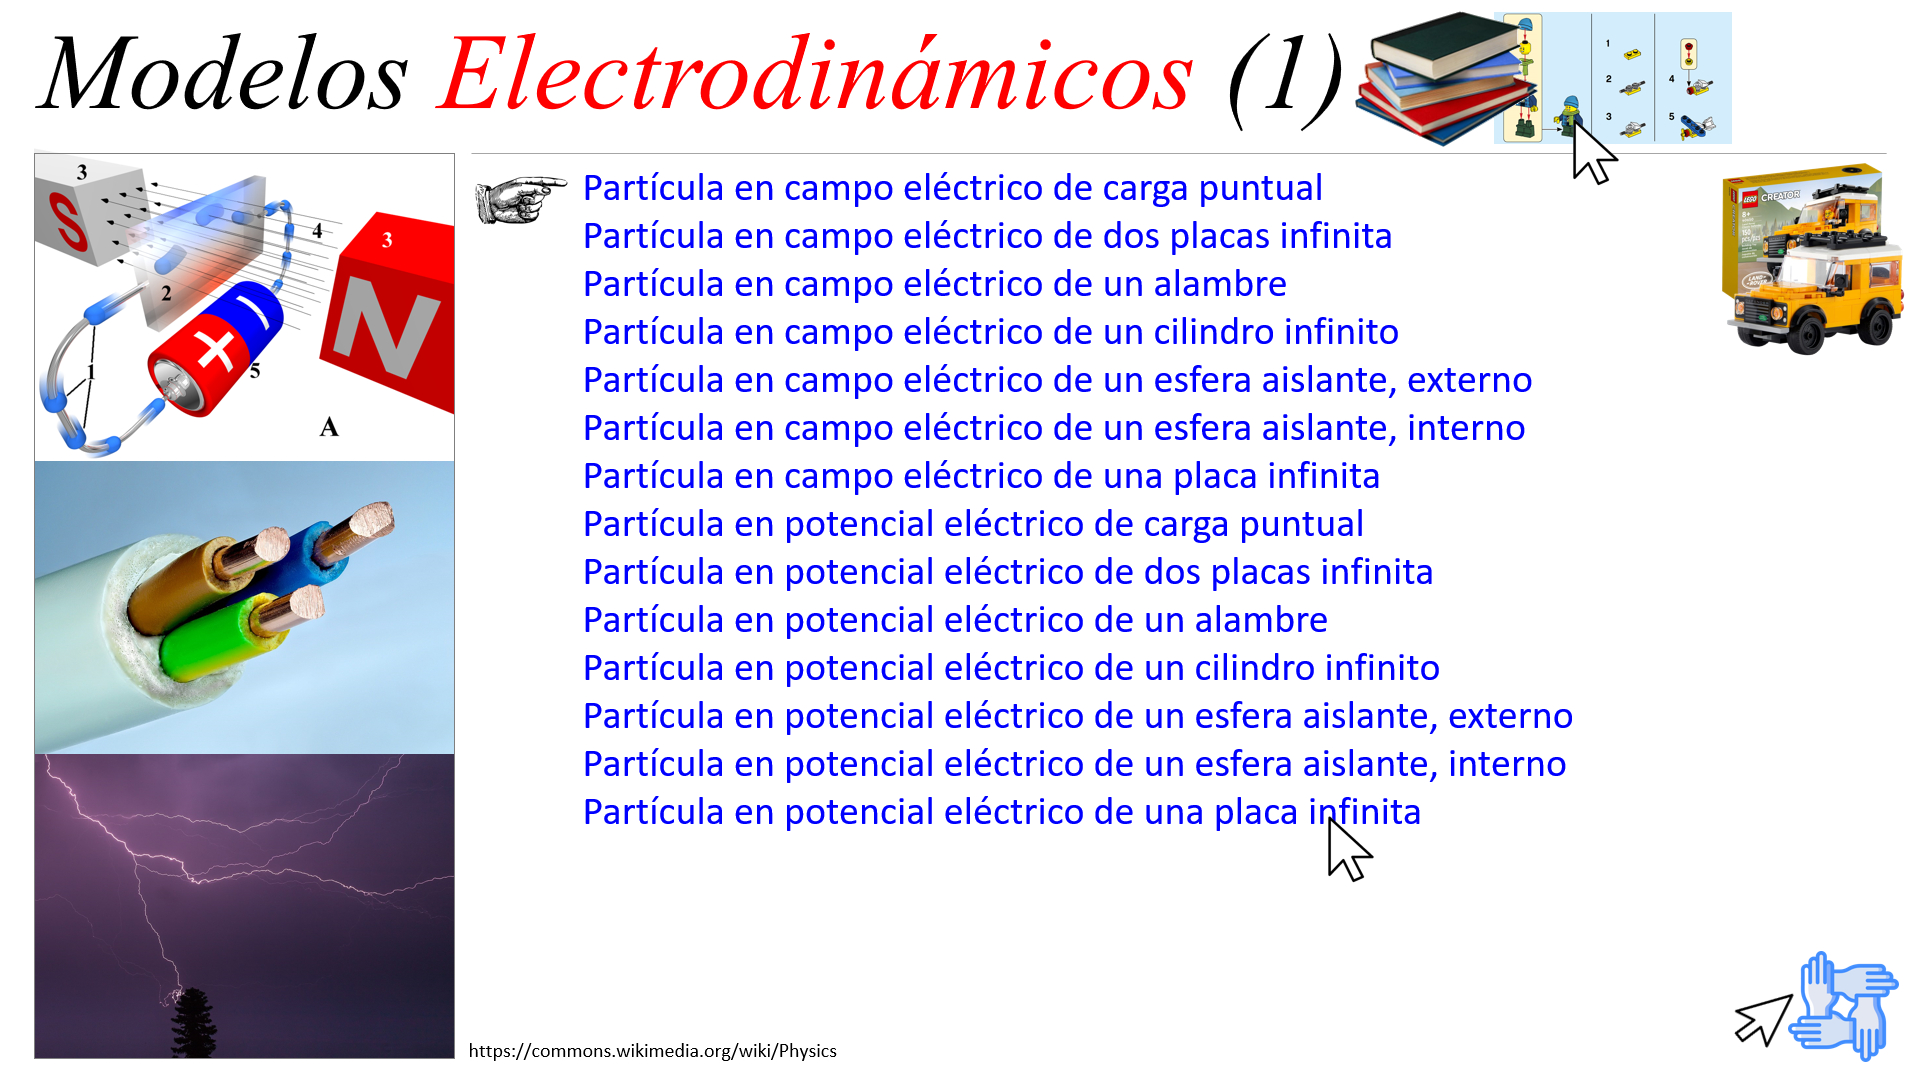 Modelos Electrodinámicos (1)